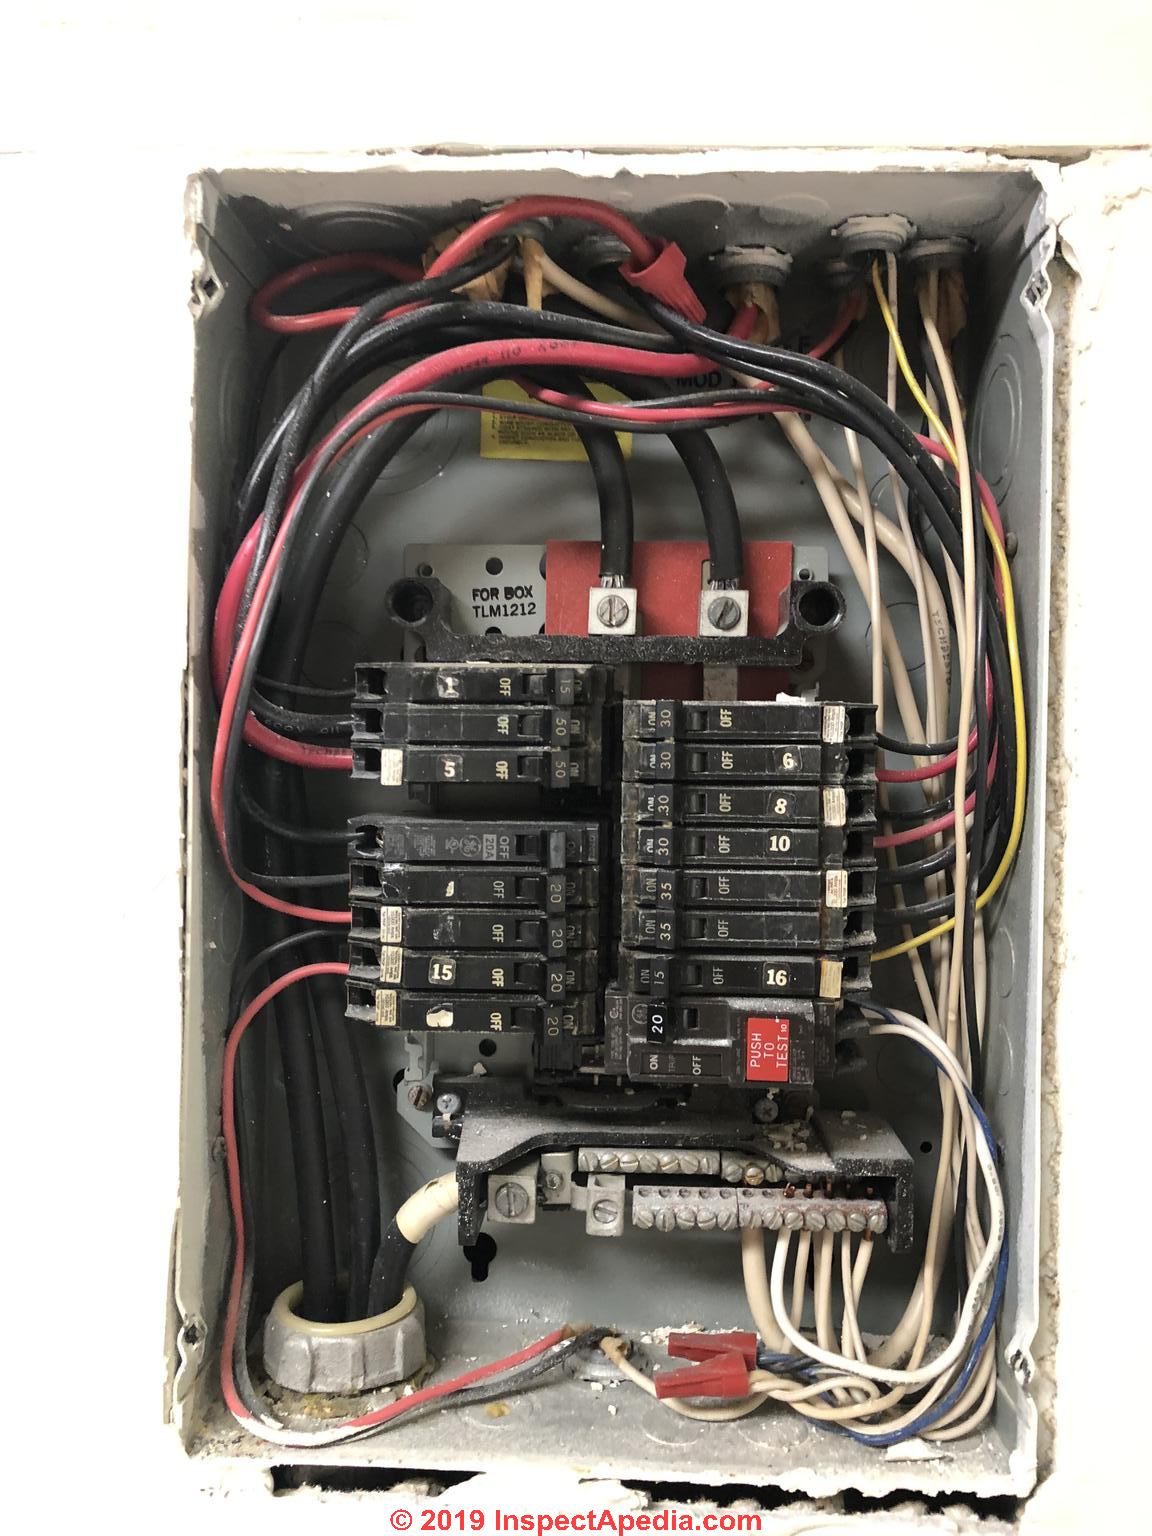 FPE Stab Lok circuit breakers & electrical panel Identification FAQs on